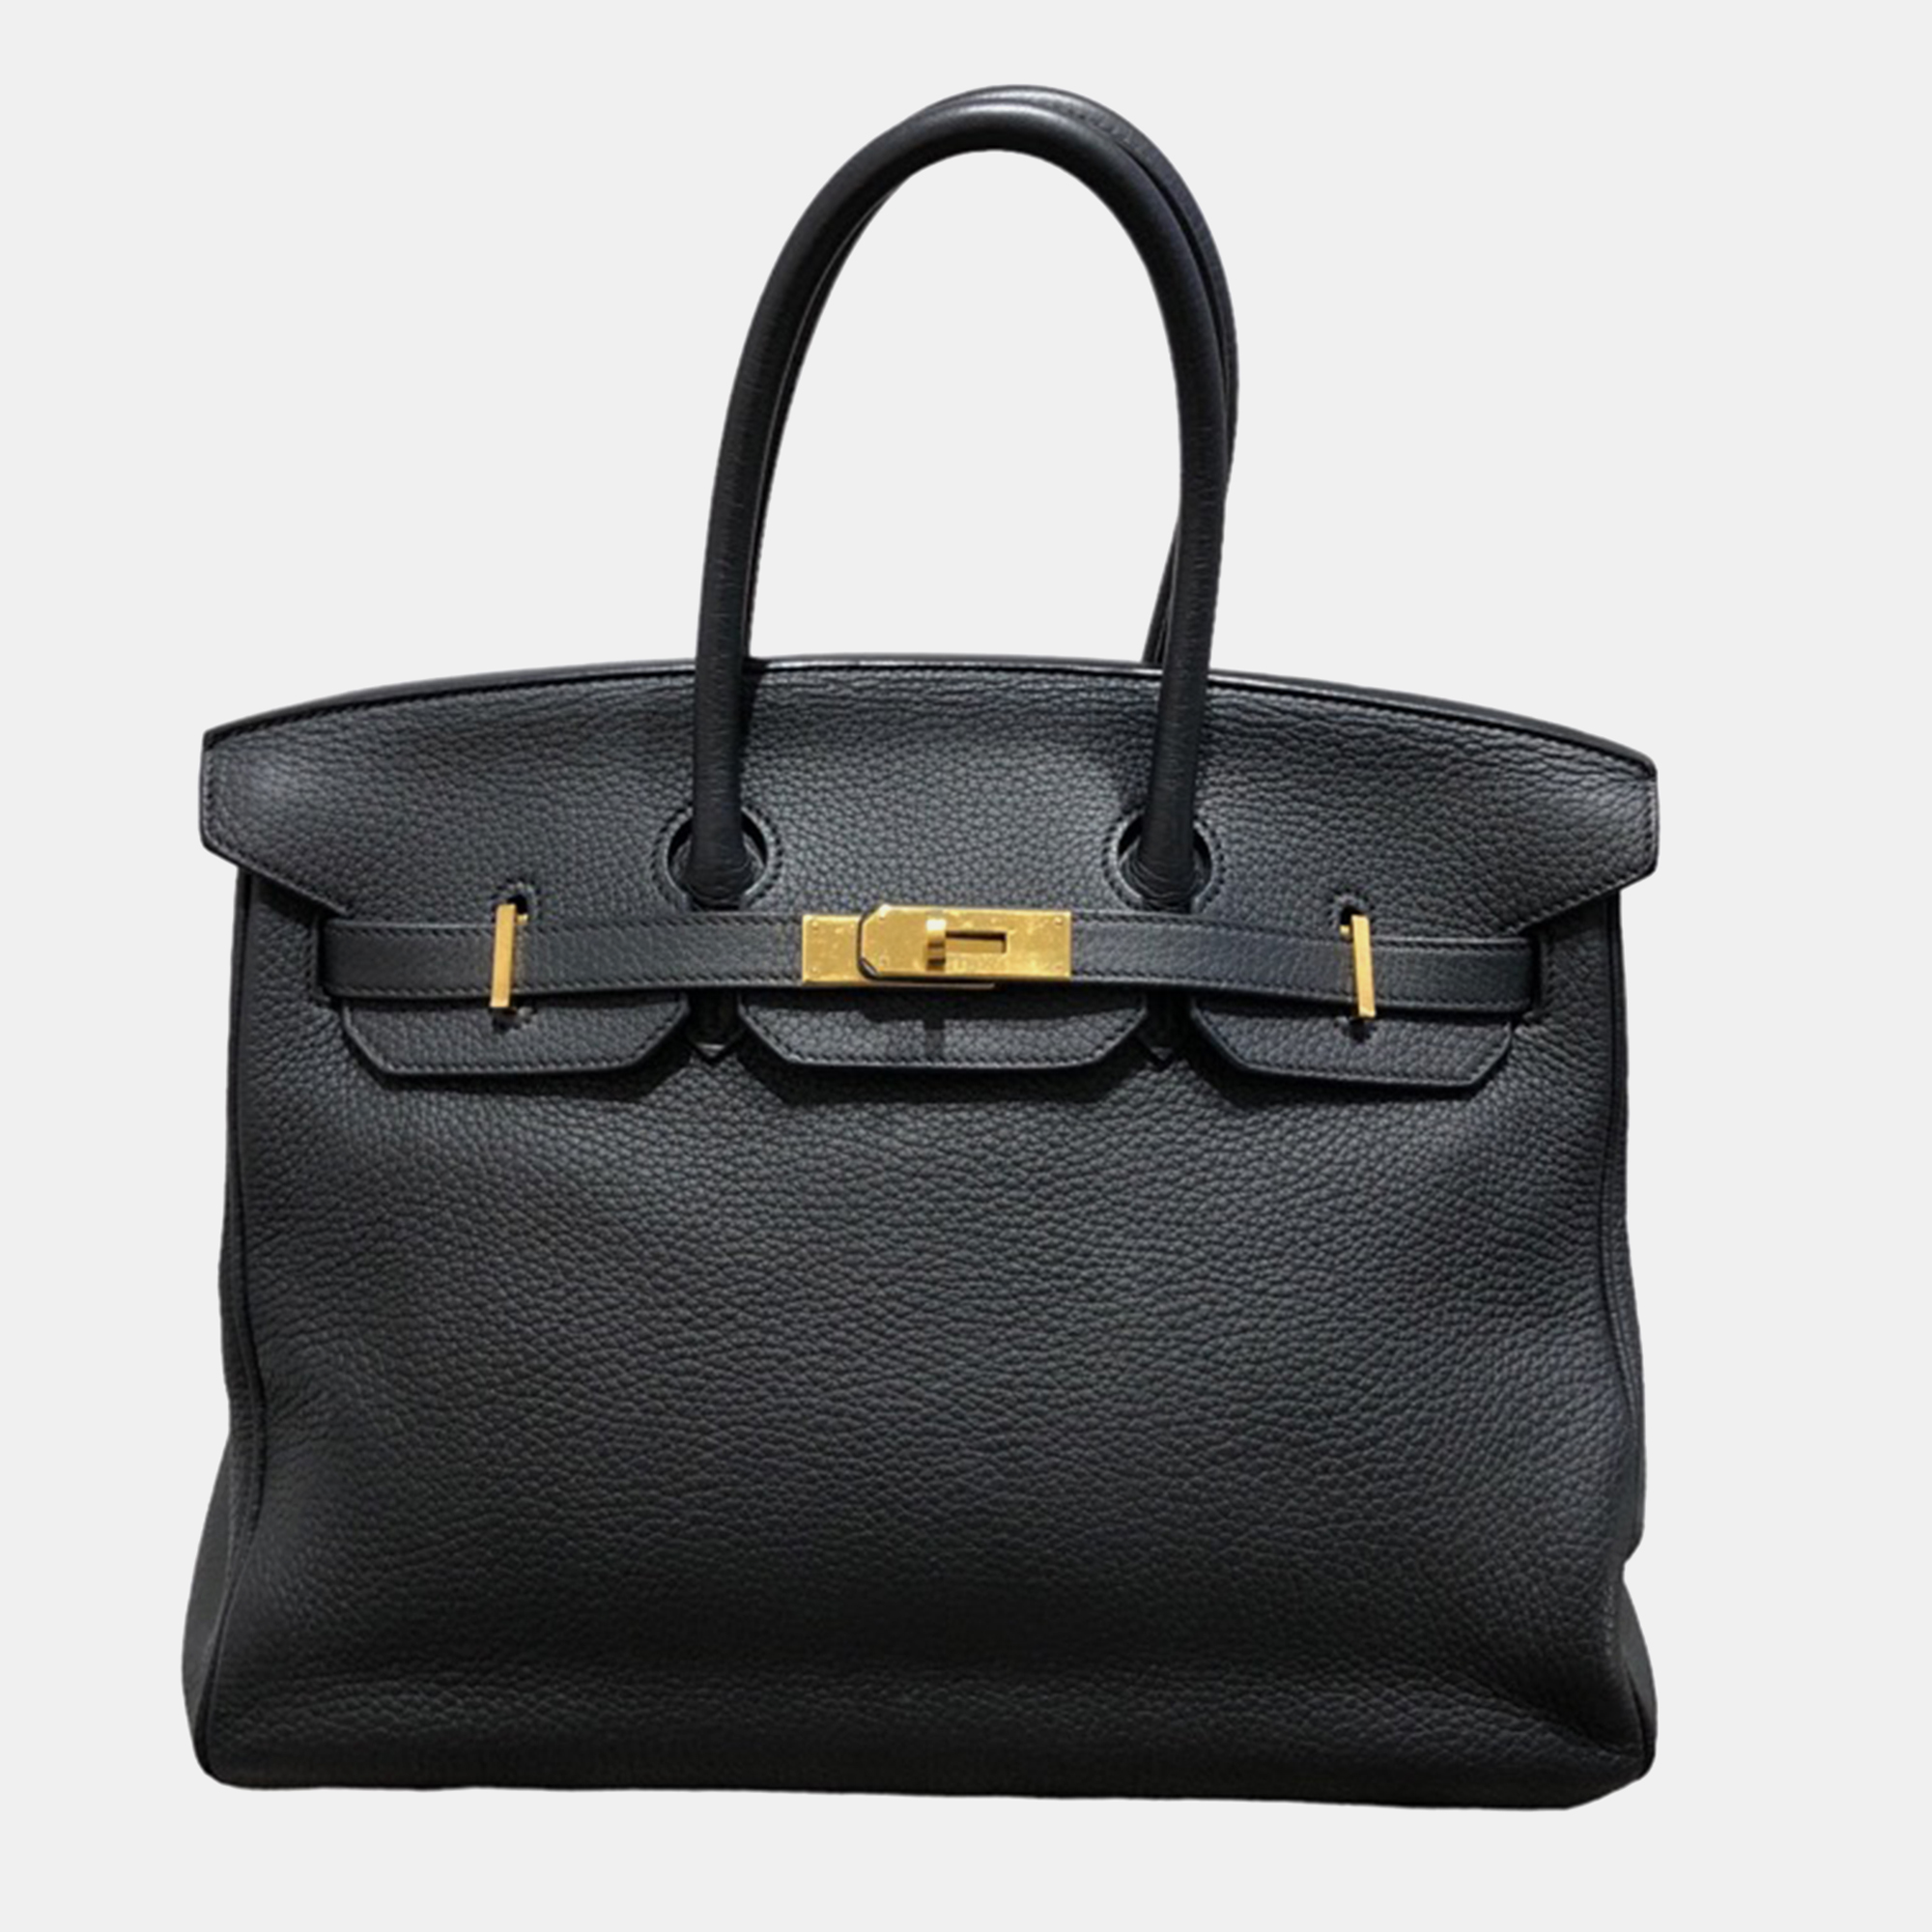 Hermes black leather clemence birkin 35 bag